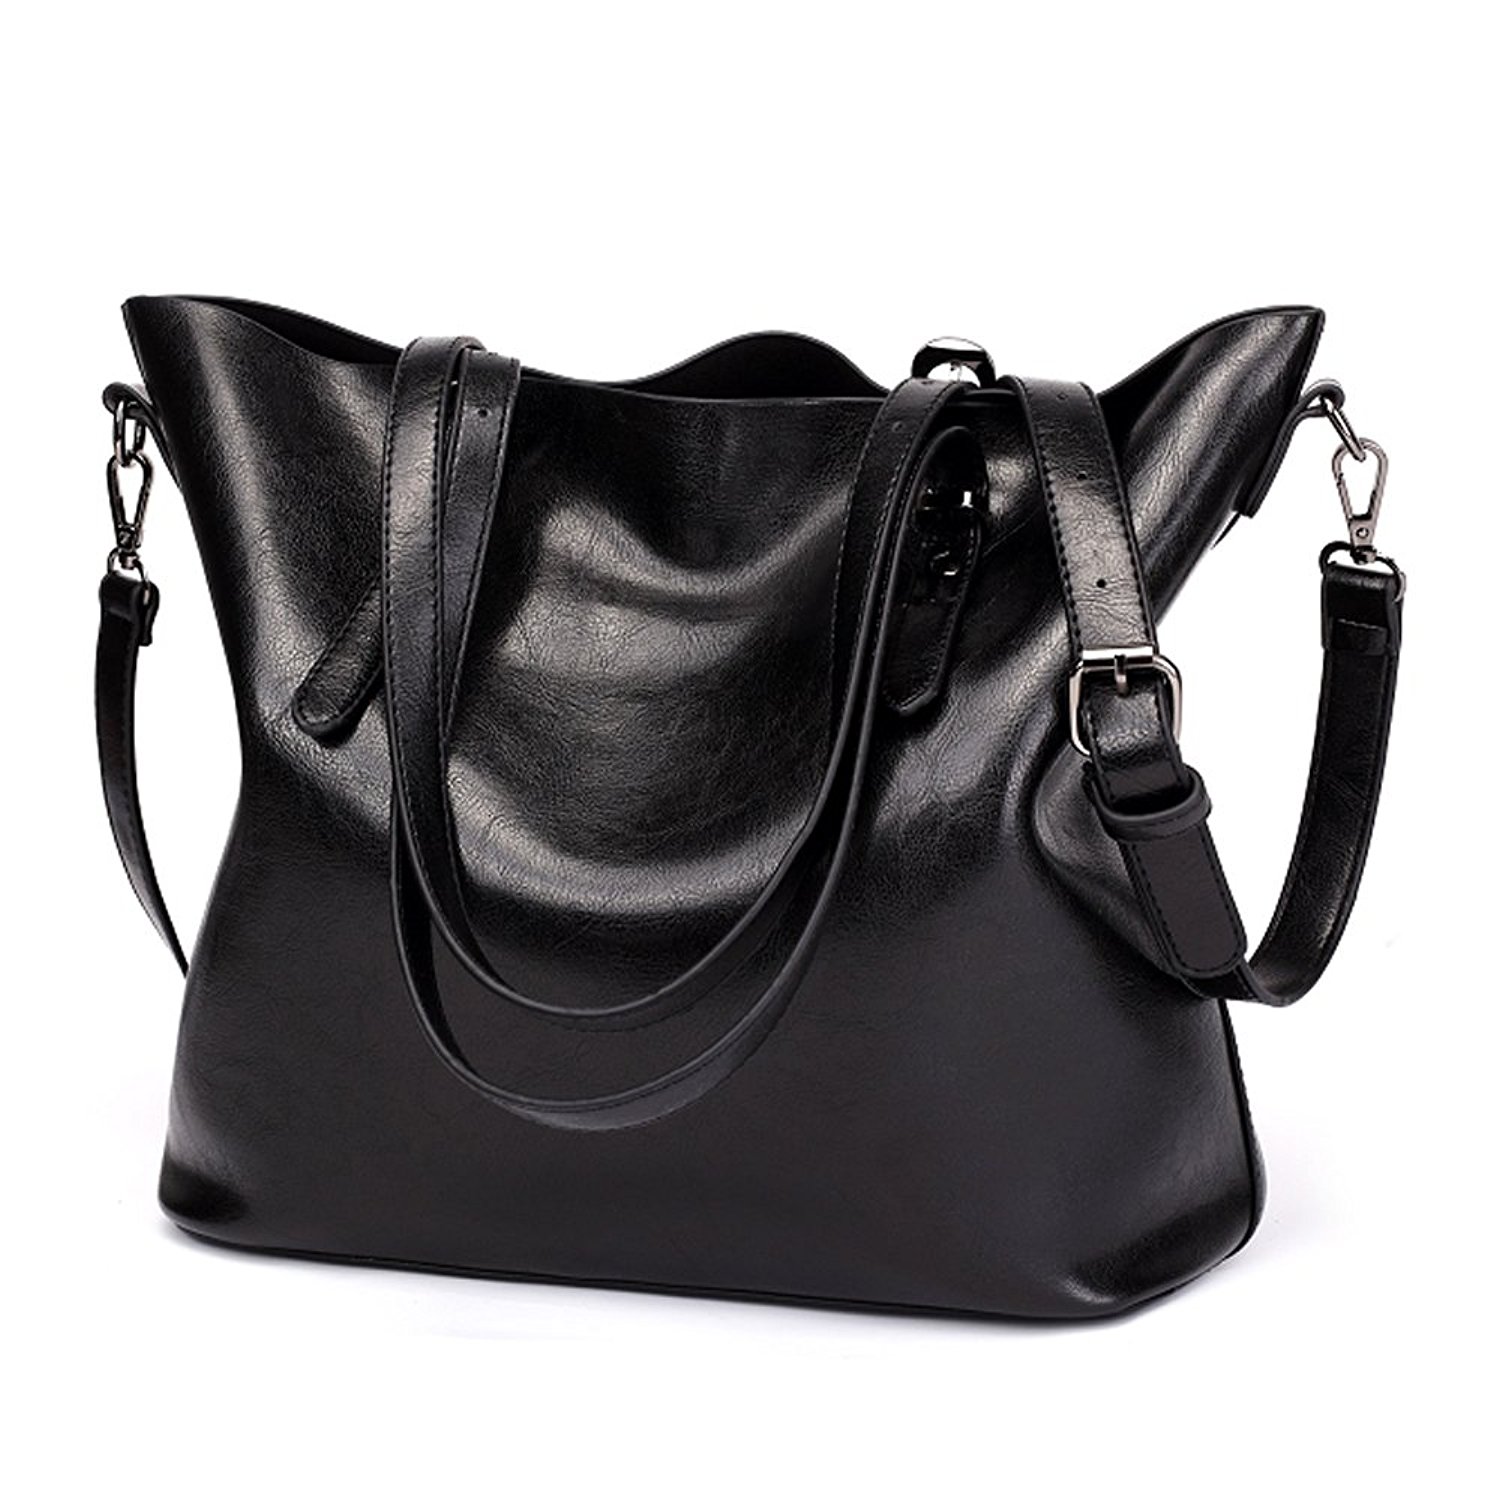 Amazon.com: LWK Women Handbags PU Leather Fashion Handbags for Women ...